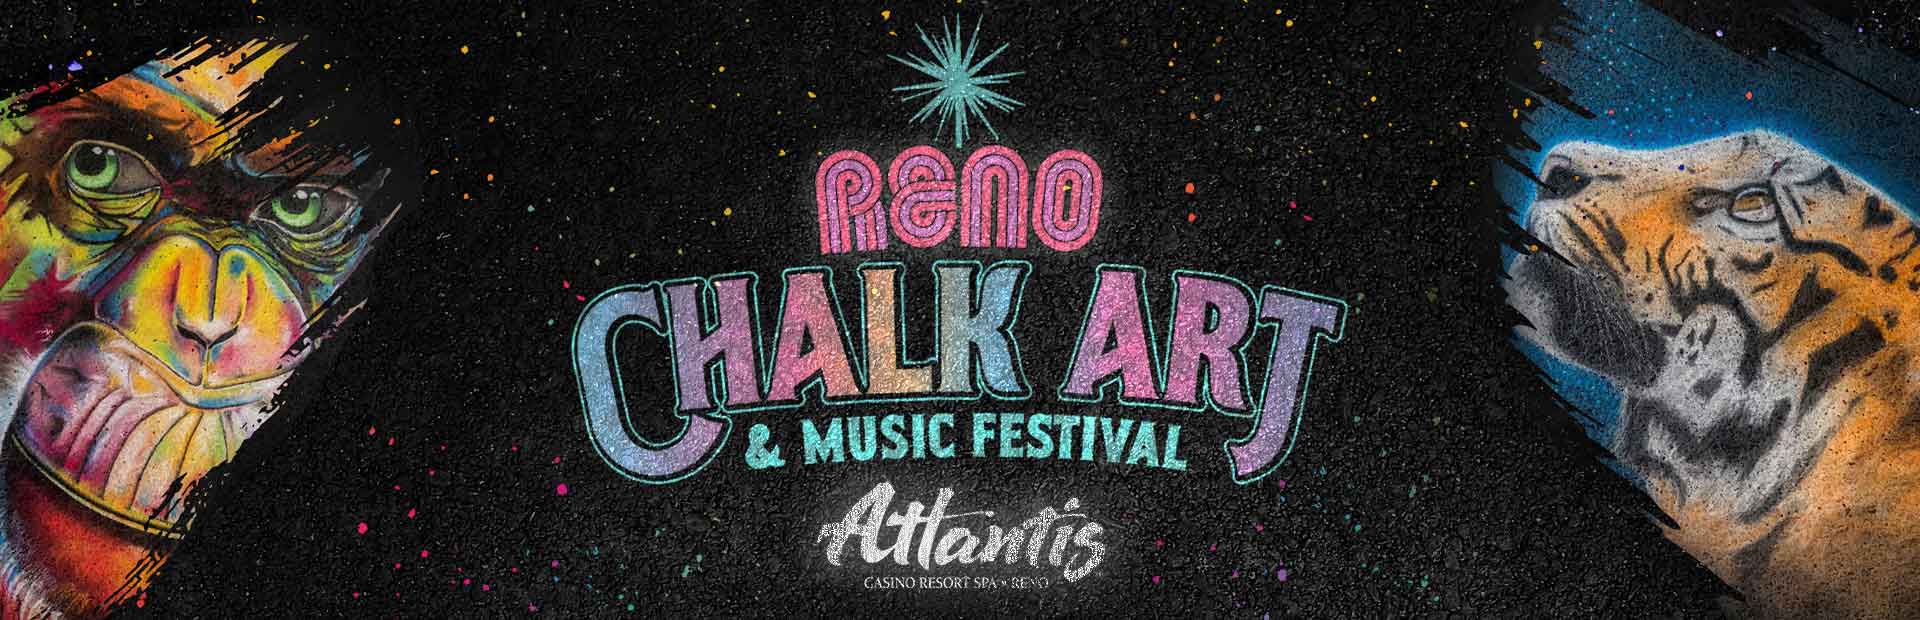 Reno Chalk Art and Music Festival